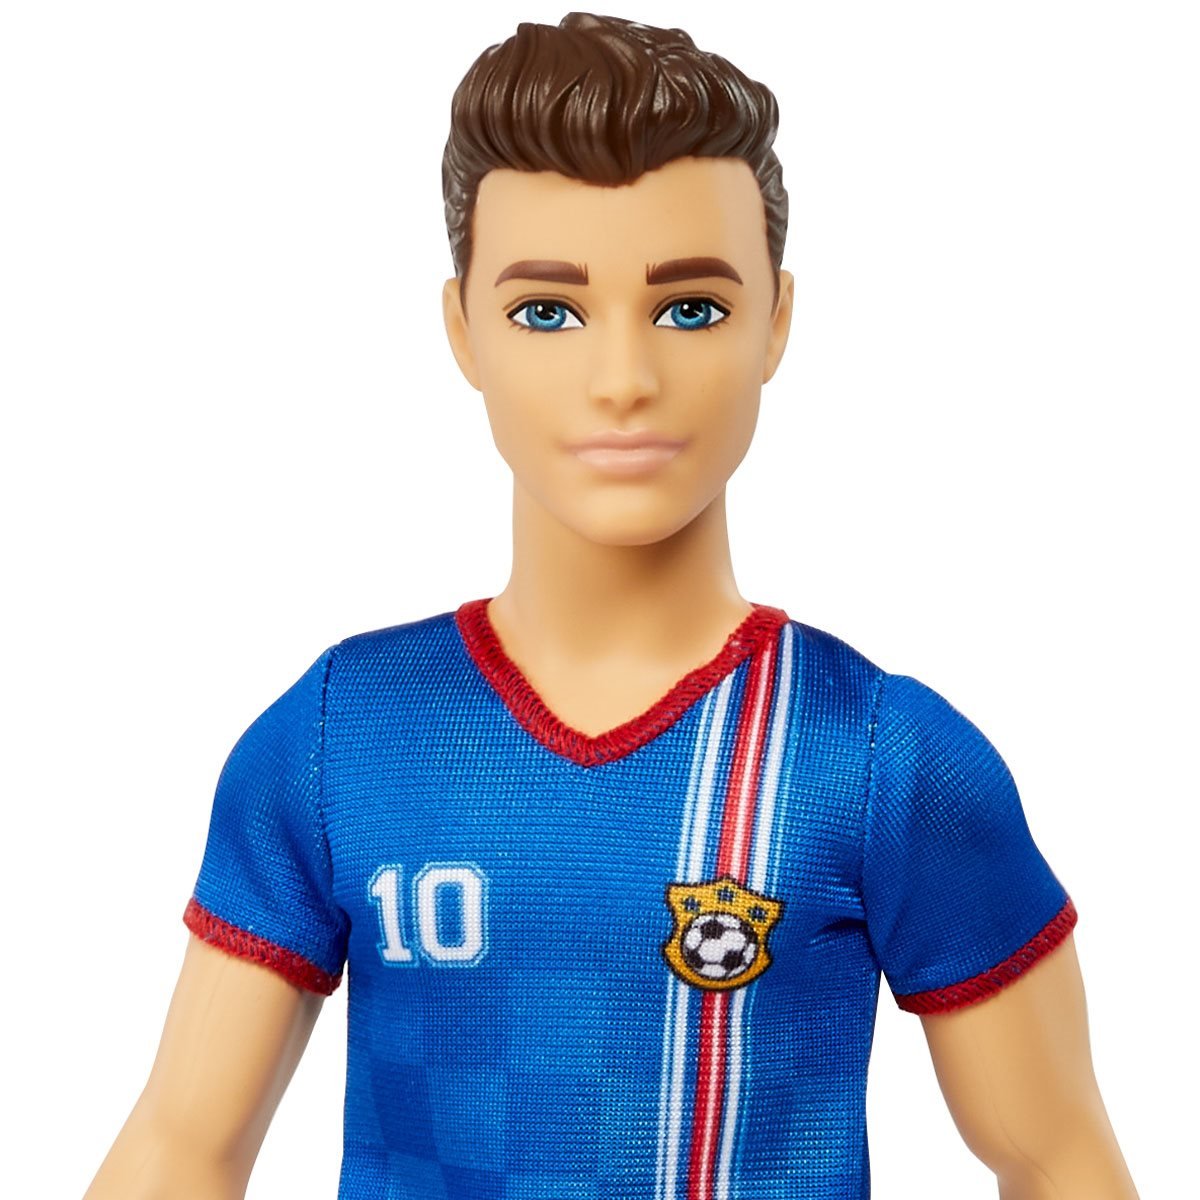 versus Vlucht Poort Barbie Ken Soccer Player Doll with Blue Shirt and Black Shorts